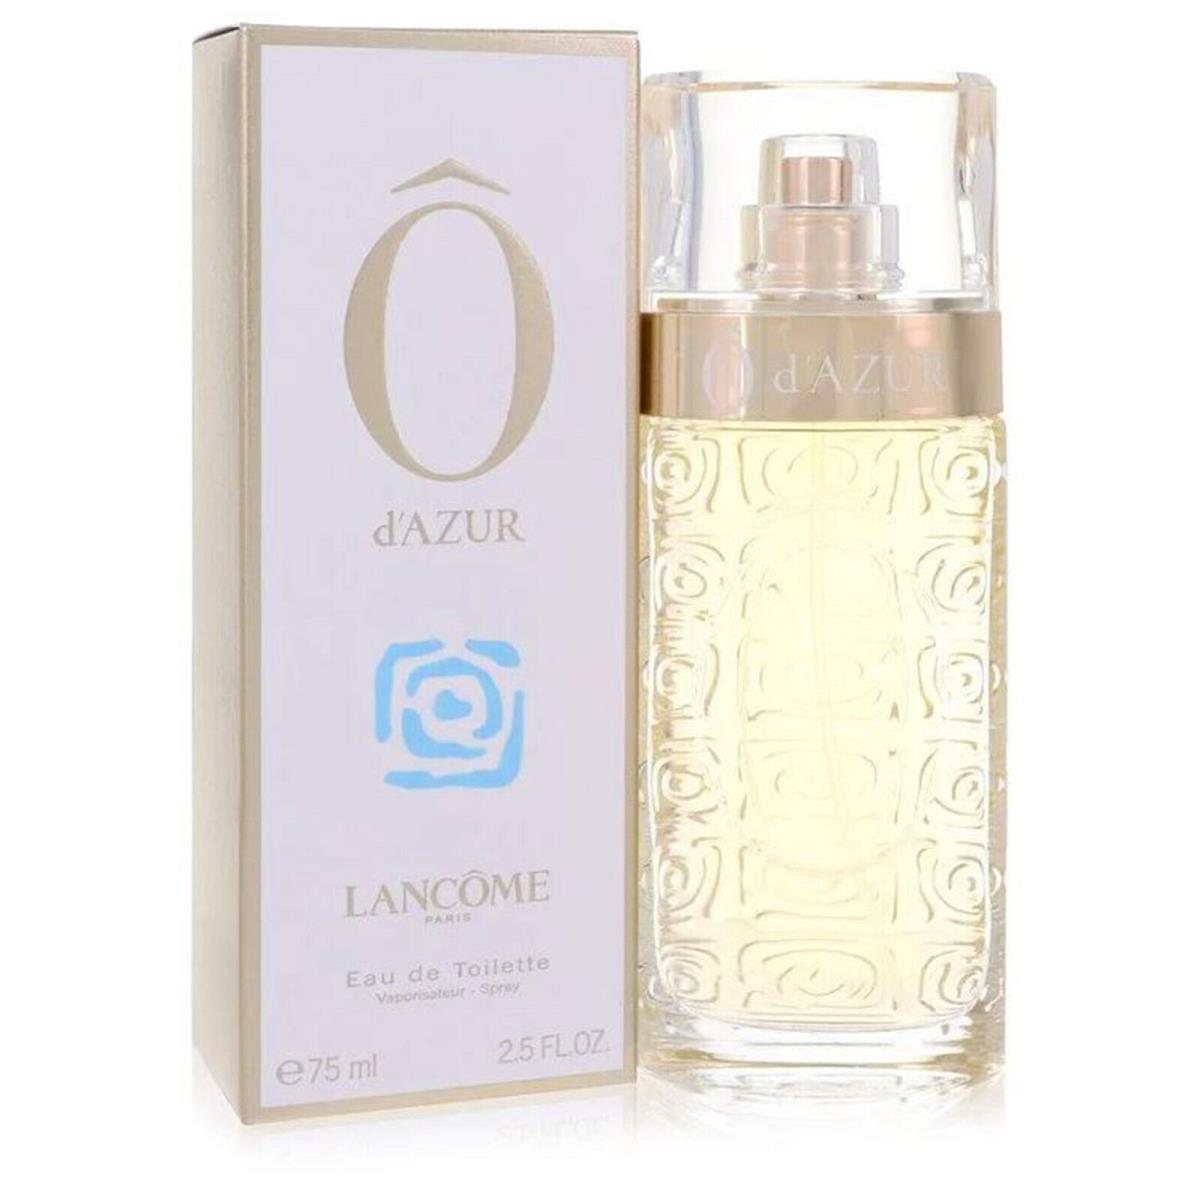 O D`azur Perfume by Lancome Women Fragrance Eau De Toilette Spray 2.5 oz Edt